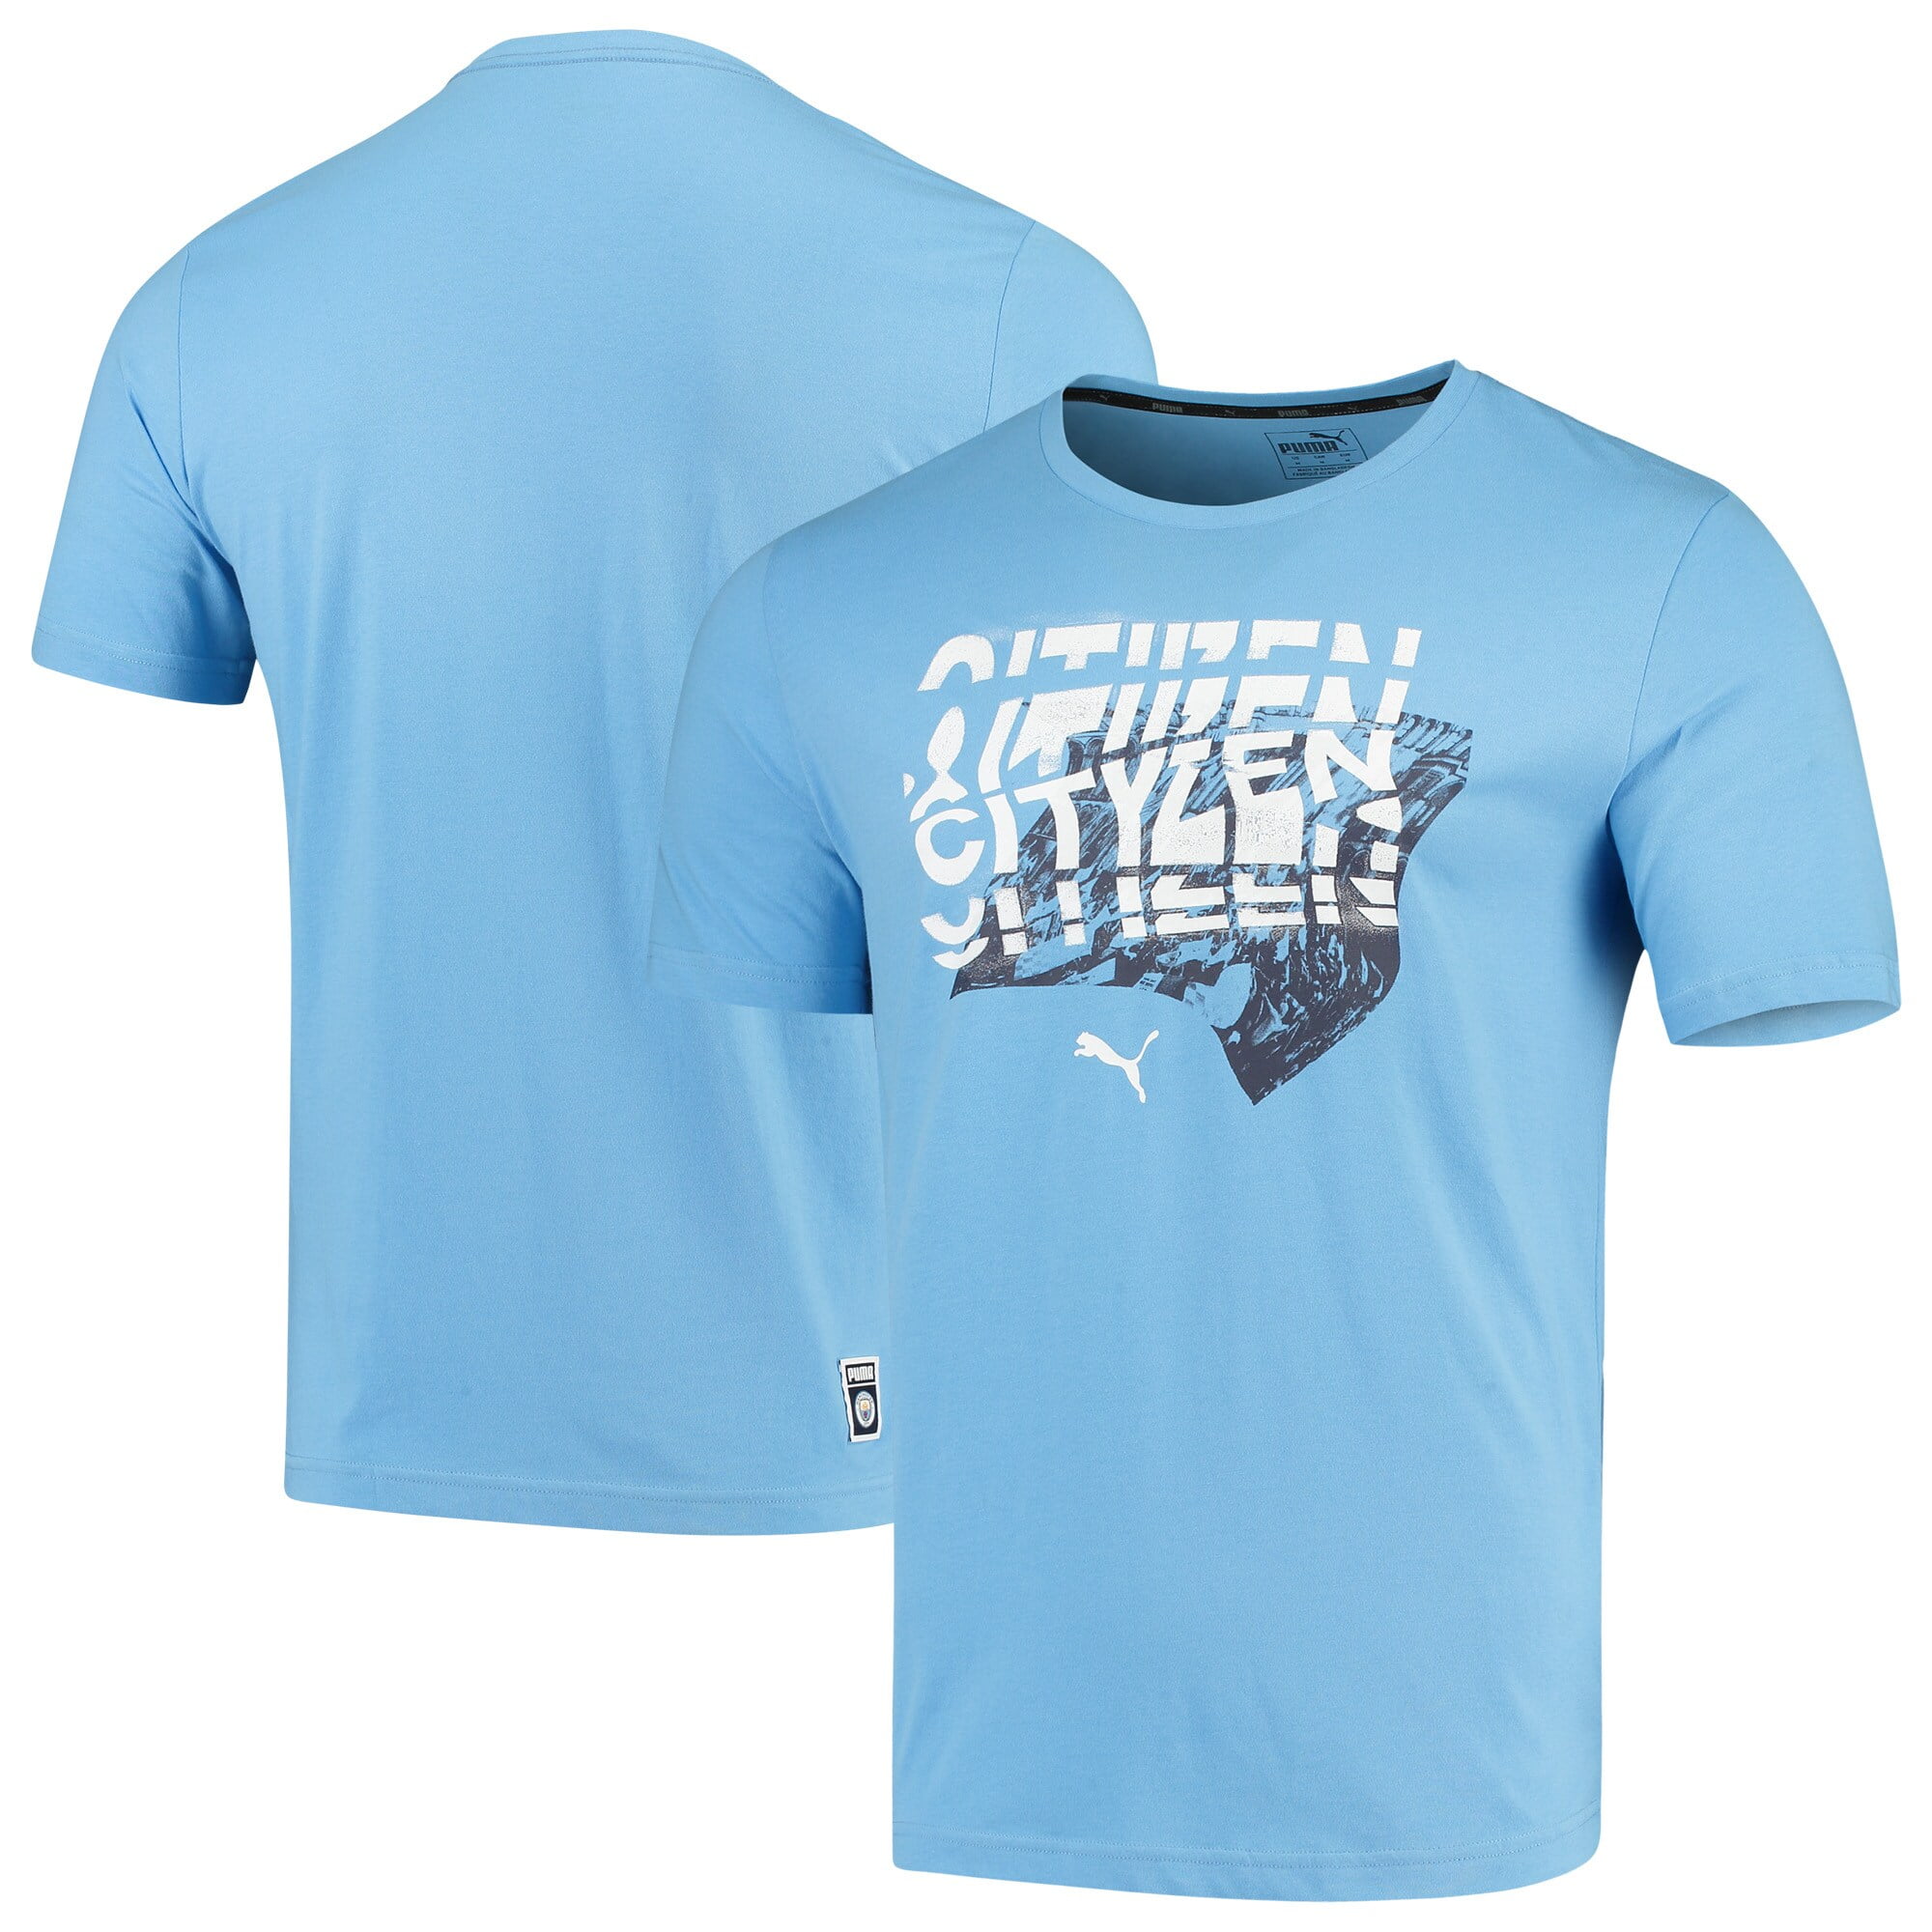 Manchester City Puma DNA T-Shirt - Light Blue - Walmart.com - Walmart.com